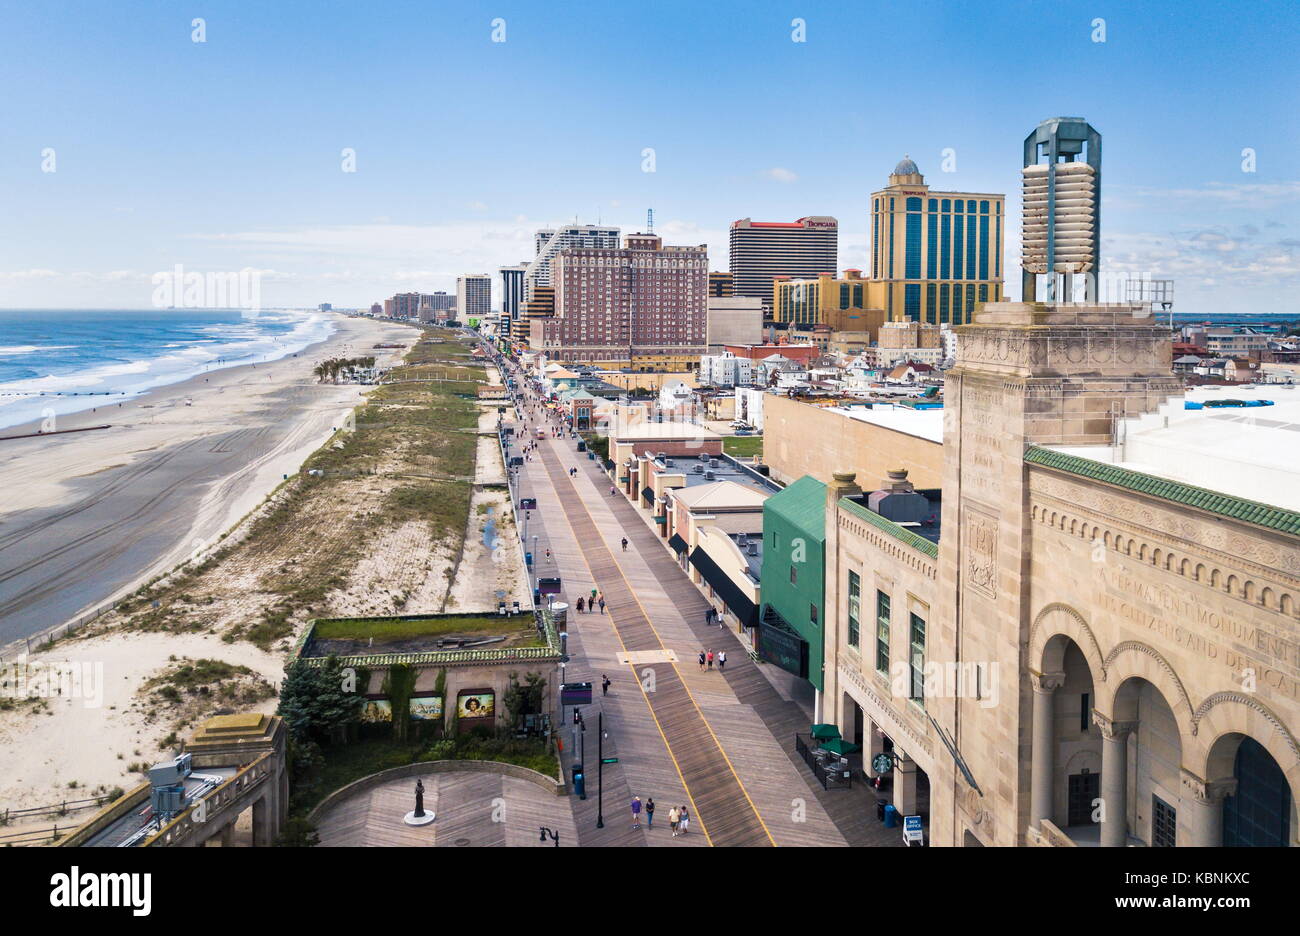 ATLANTIC CITY, USA - SEPTEMBER 20, 2017: Atlantic city boardwalk aerial view. Boardwalk is the hub of casinos, restaurants and travel spots Stock Photo